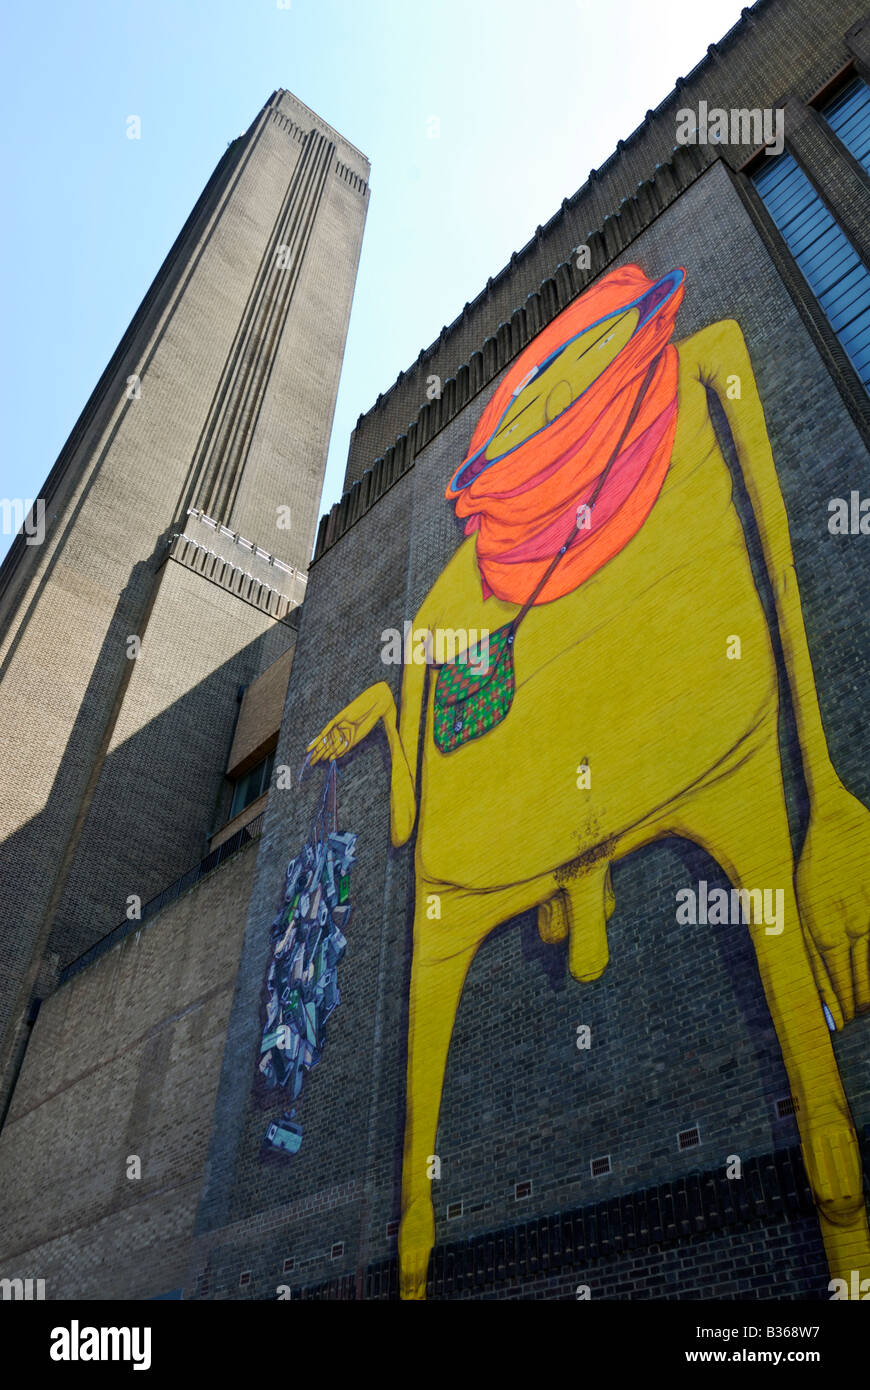 England, London, Southbank, Tate Modern Gallery, artist Os Gêmeos mural Stock Photo